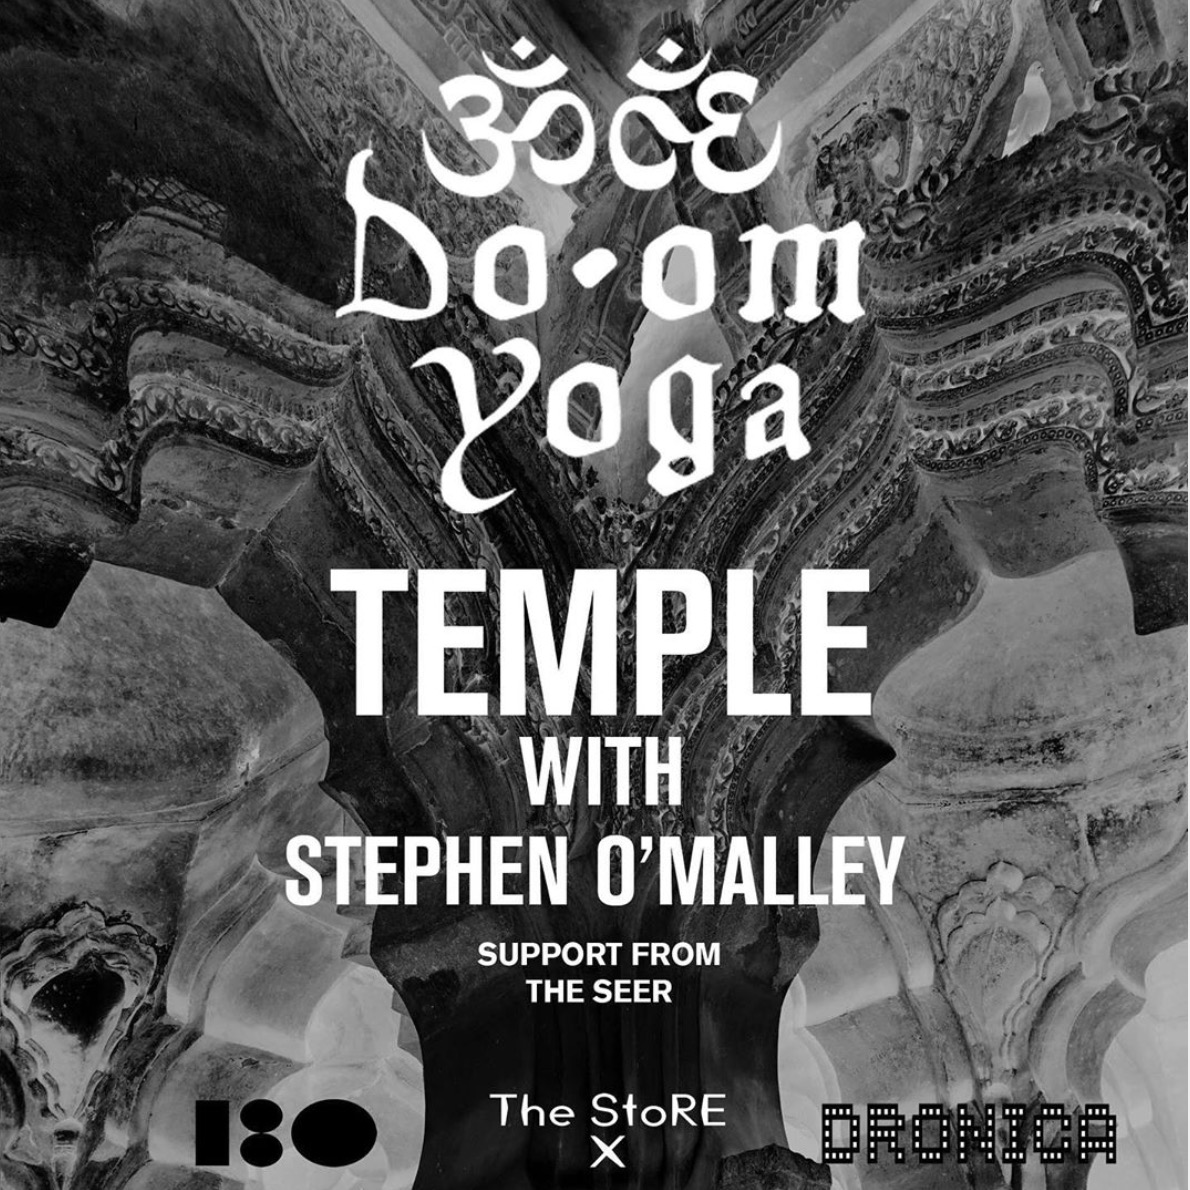 Stephen O'Malley (solo) @ do.om yoga  @ 180 The Strand